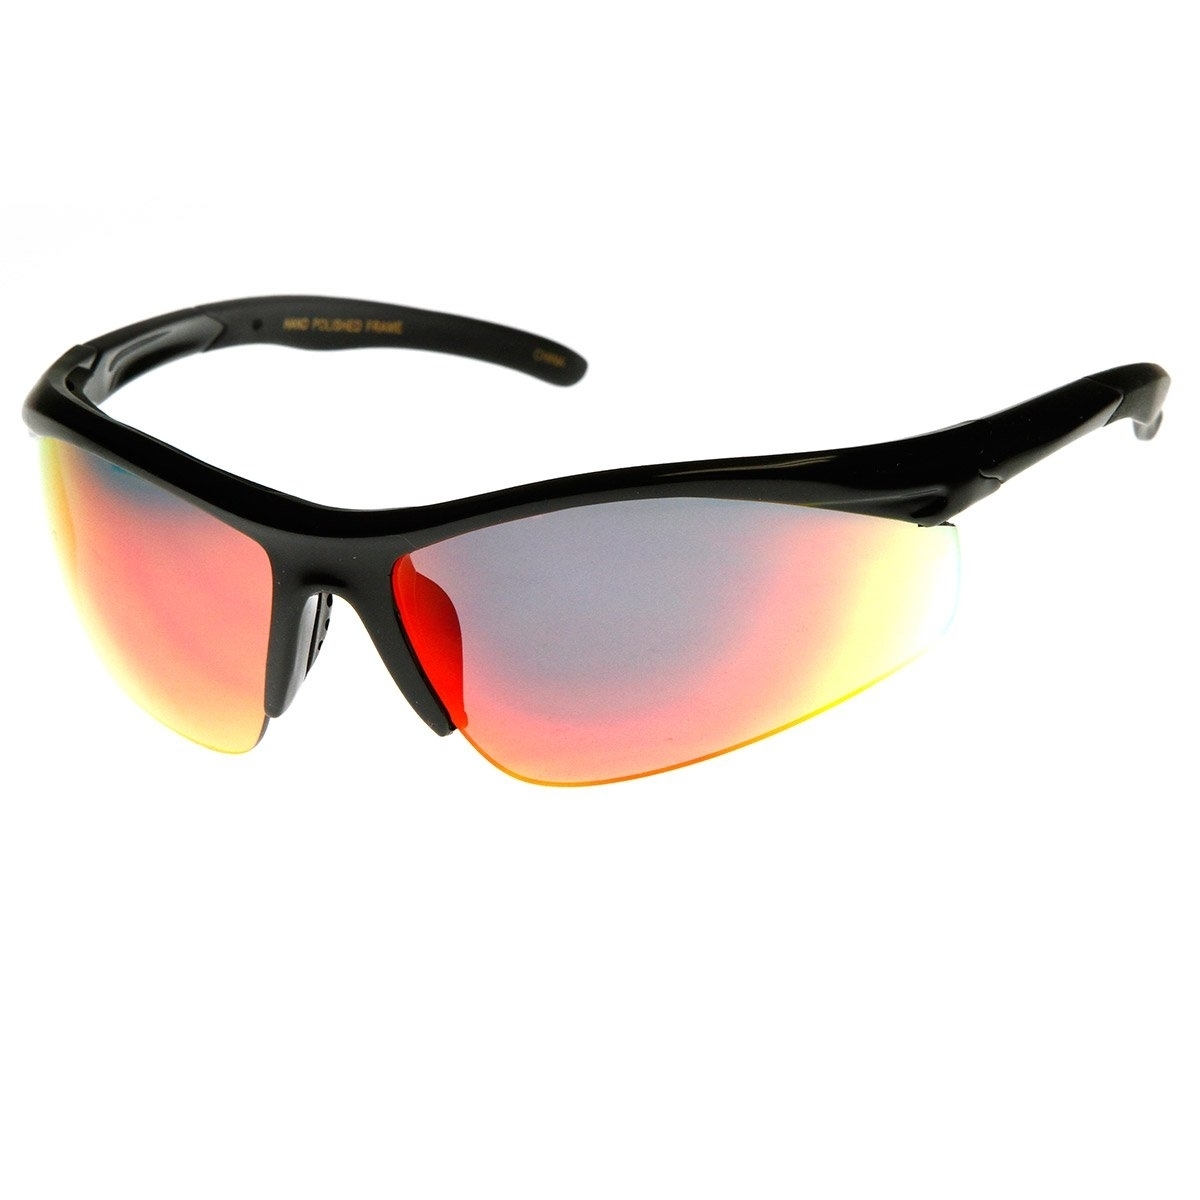 High Quality Semi-Rimless Running Cycling Sports Wrap Sunglasses - Black Ice+Black Fire+Case